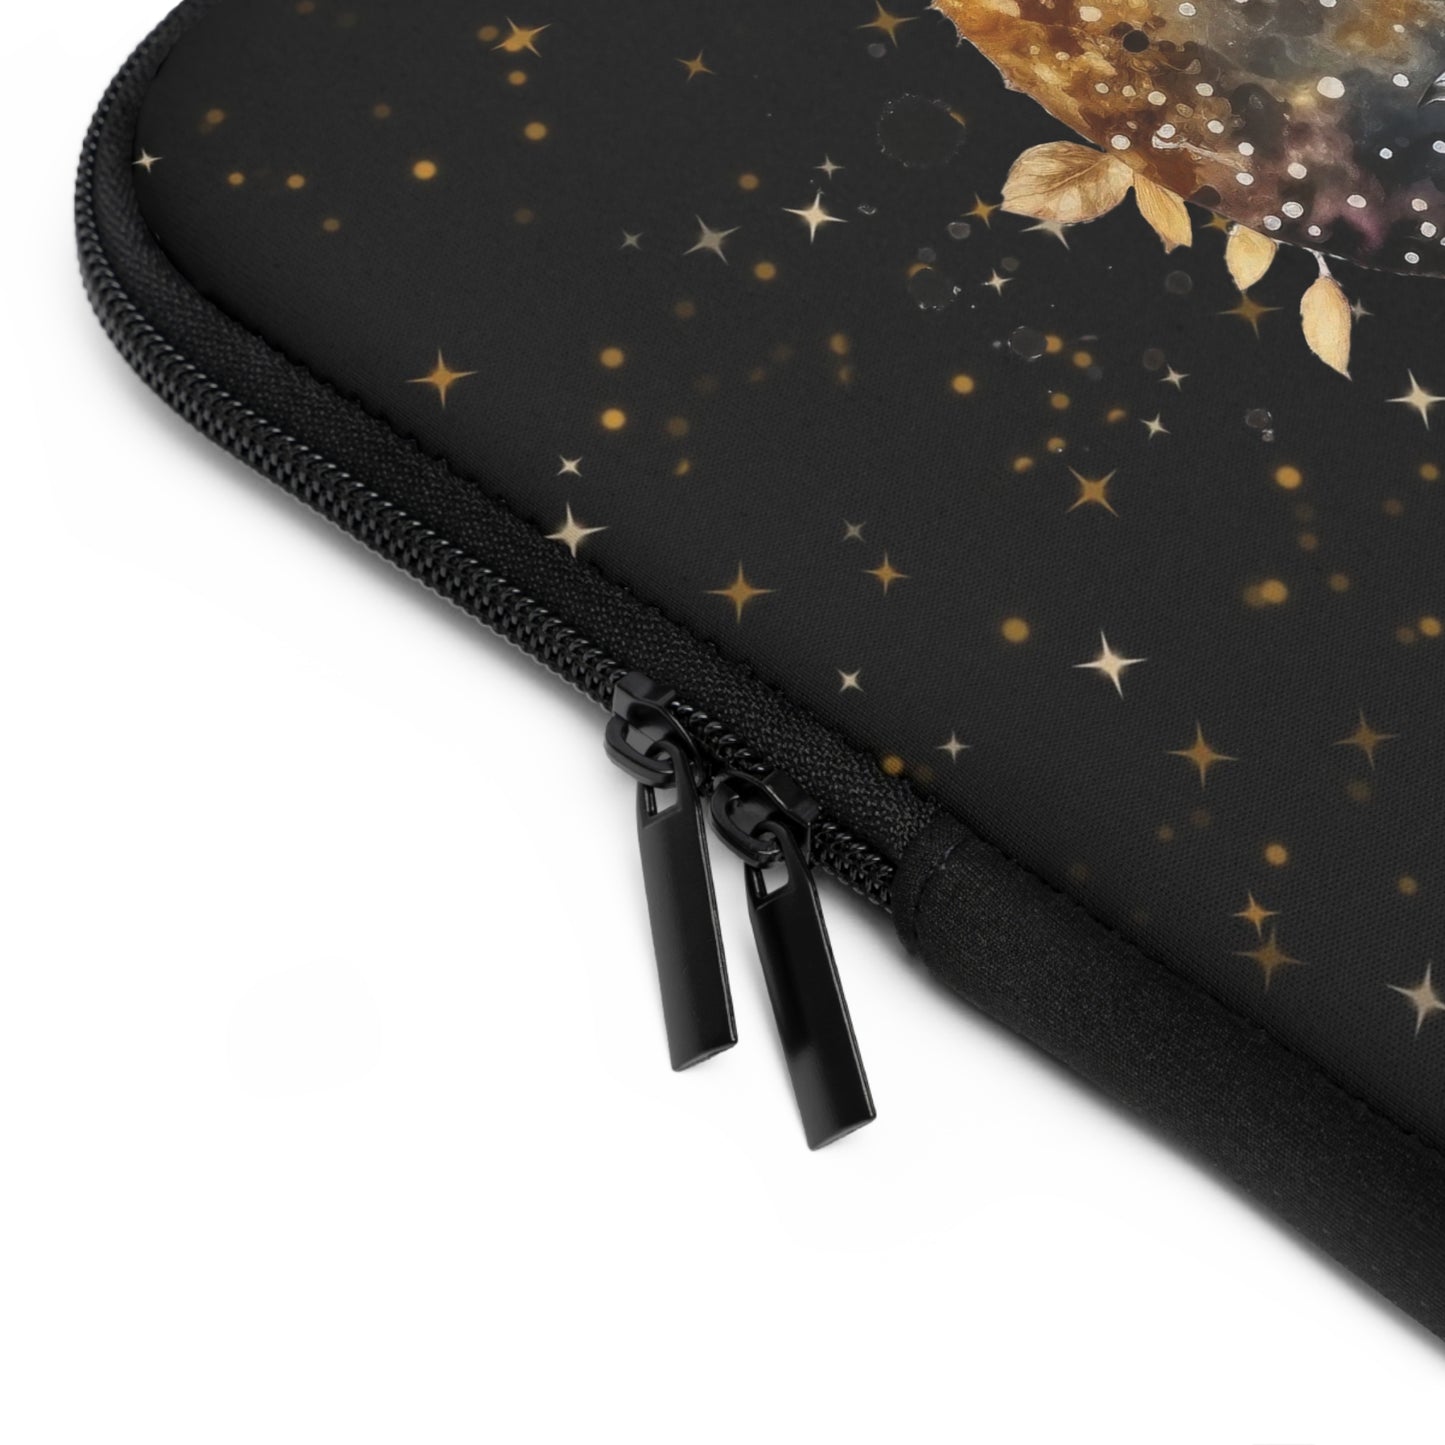 Lotus Moon Laptop Case, Witchy laptop sleeve